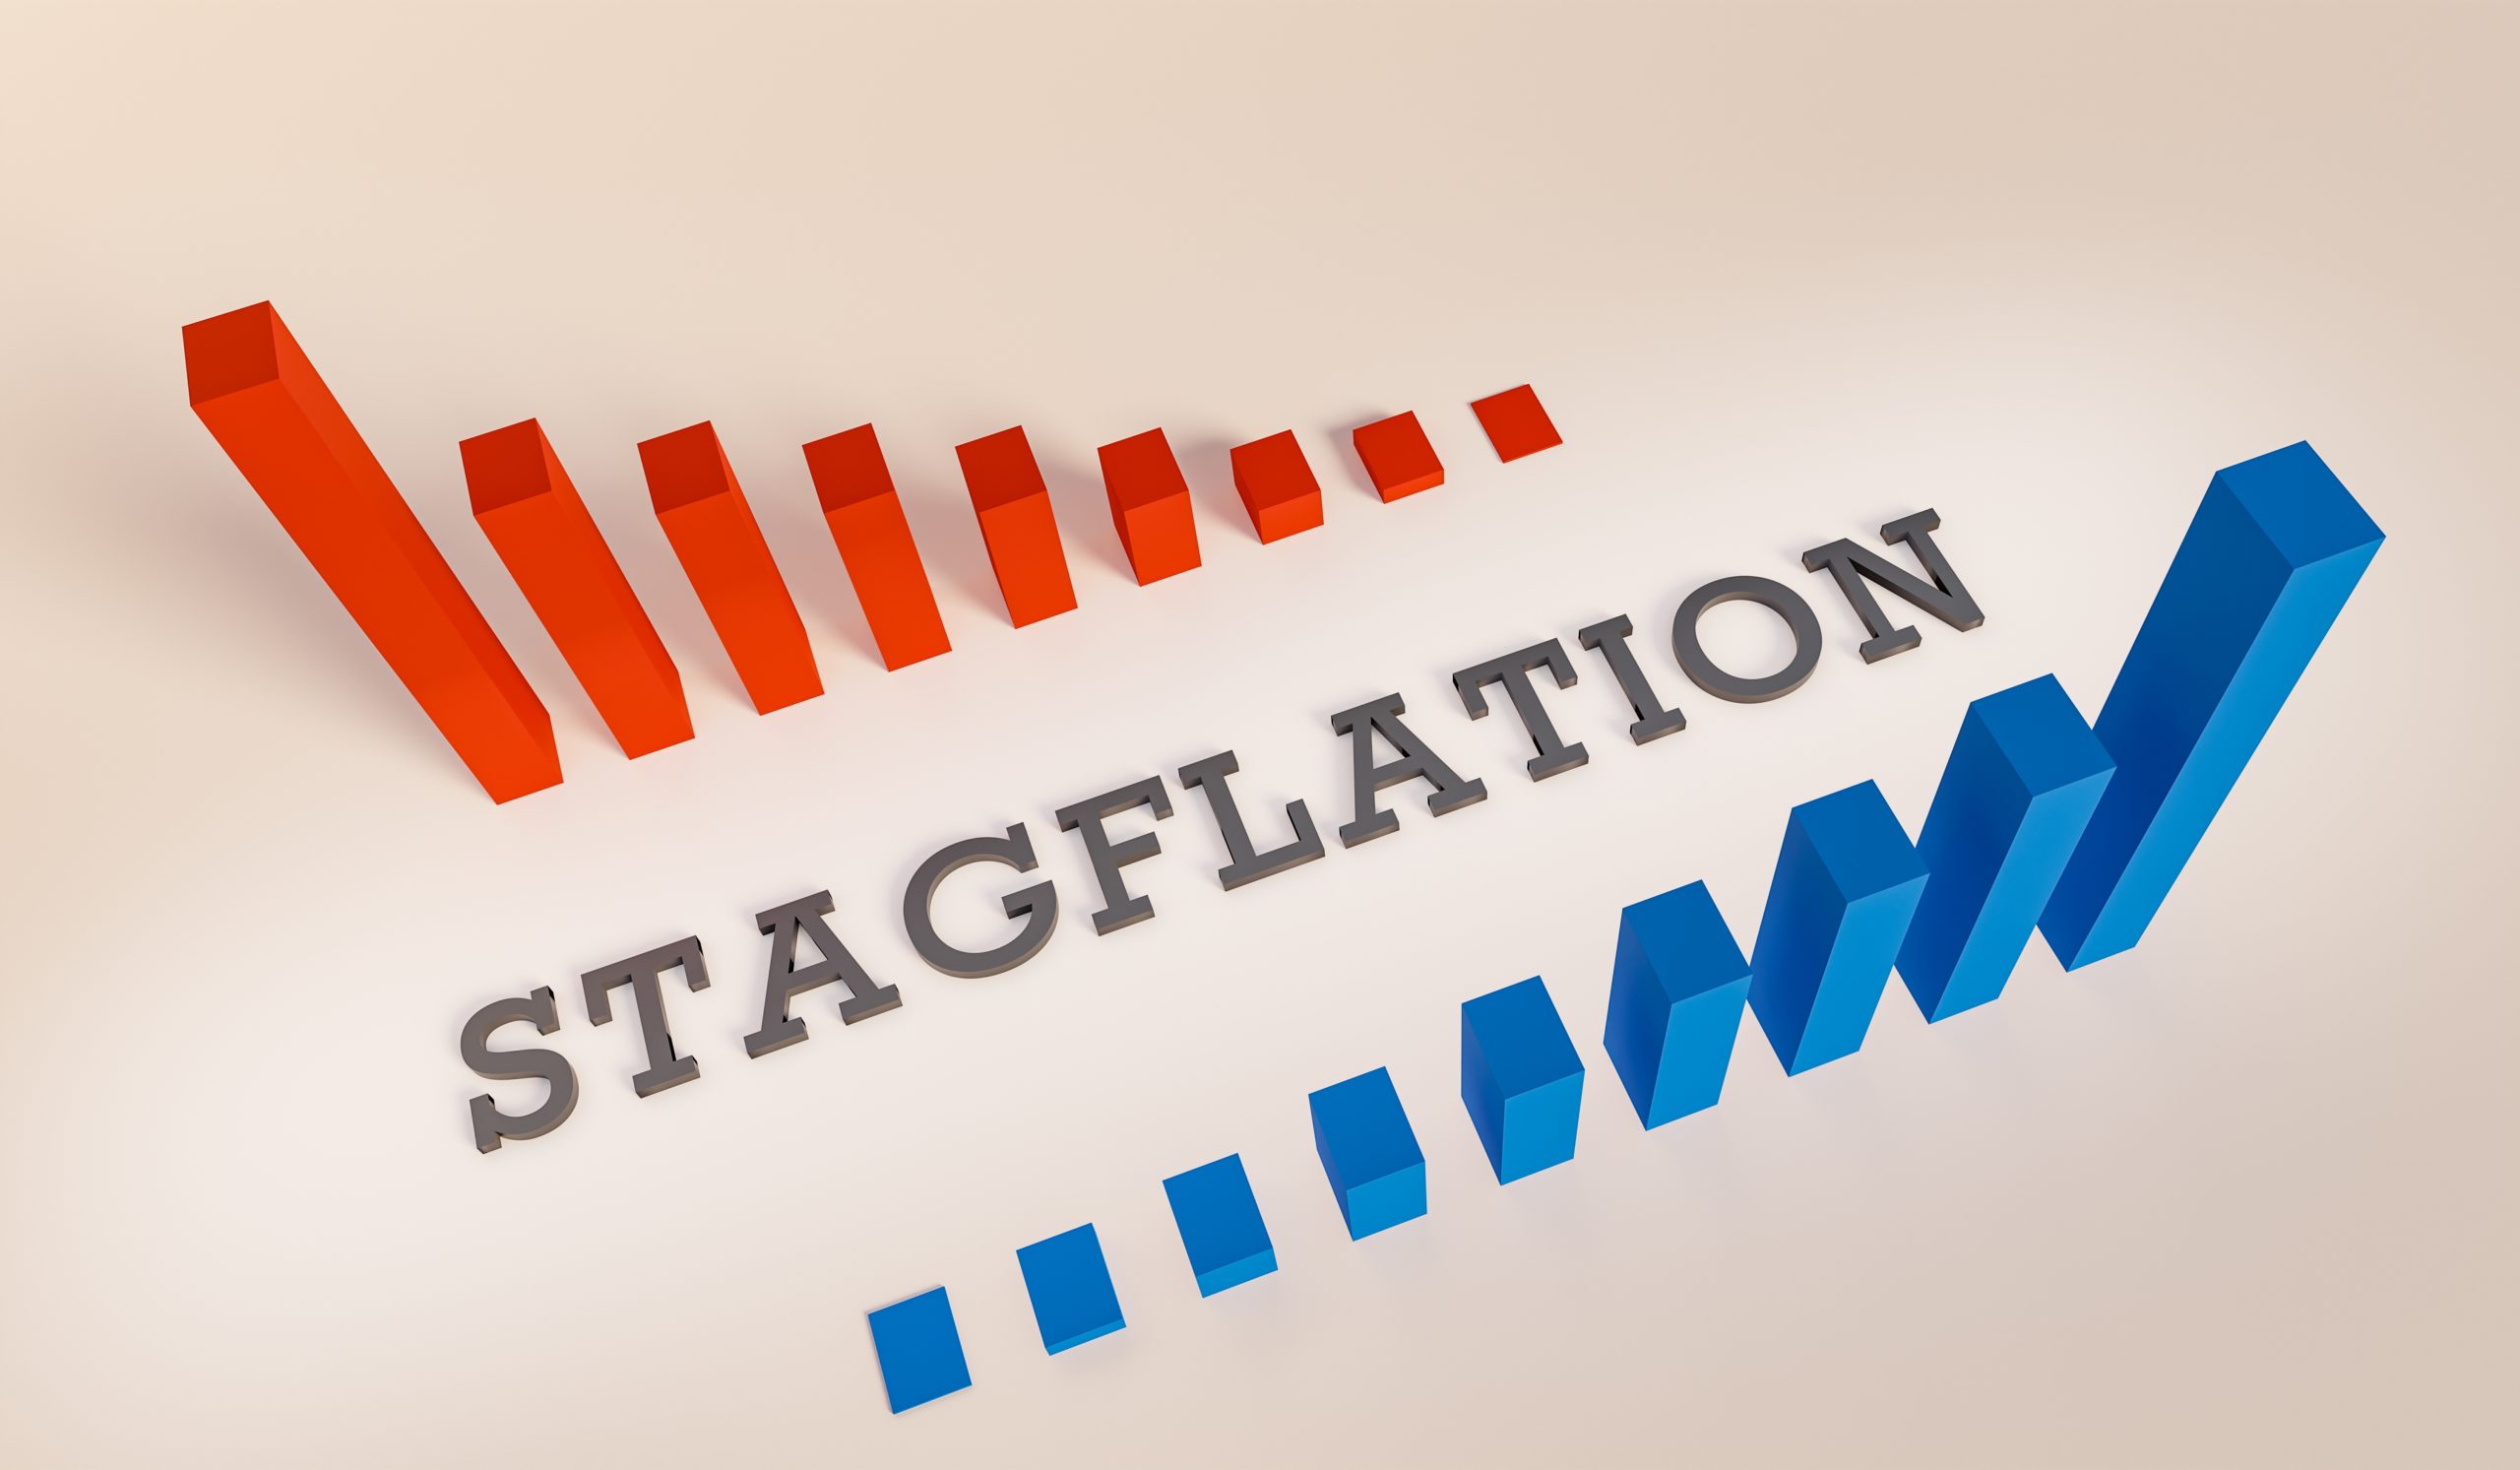 Stagflation